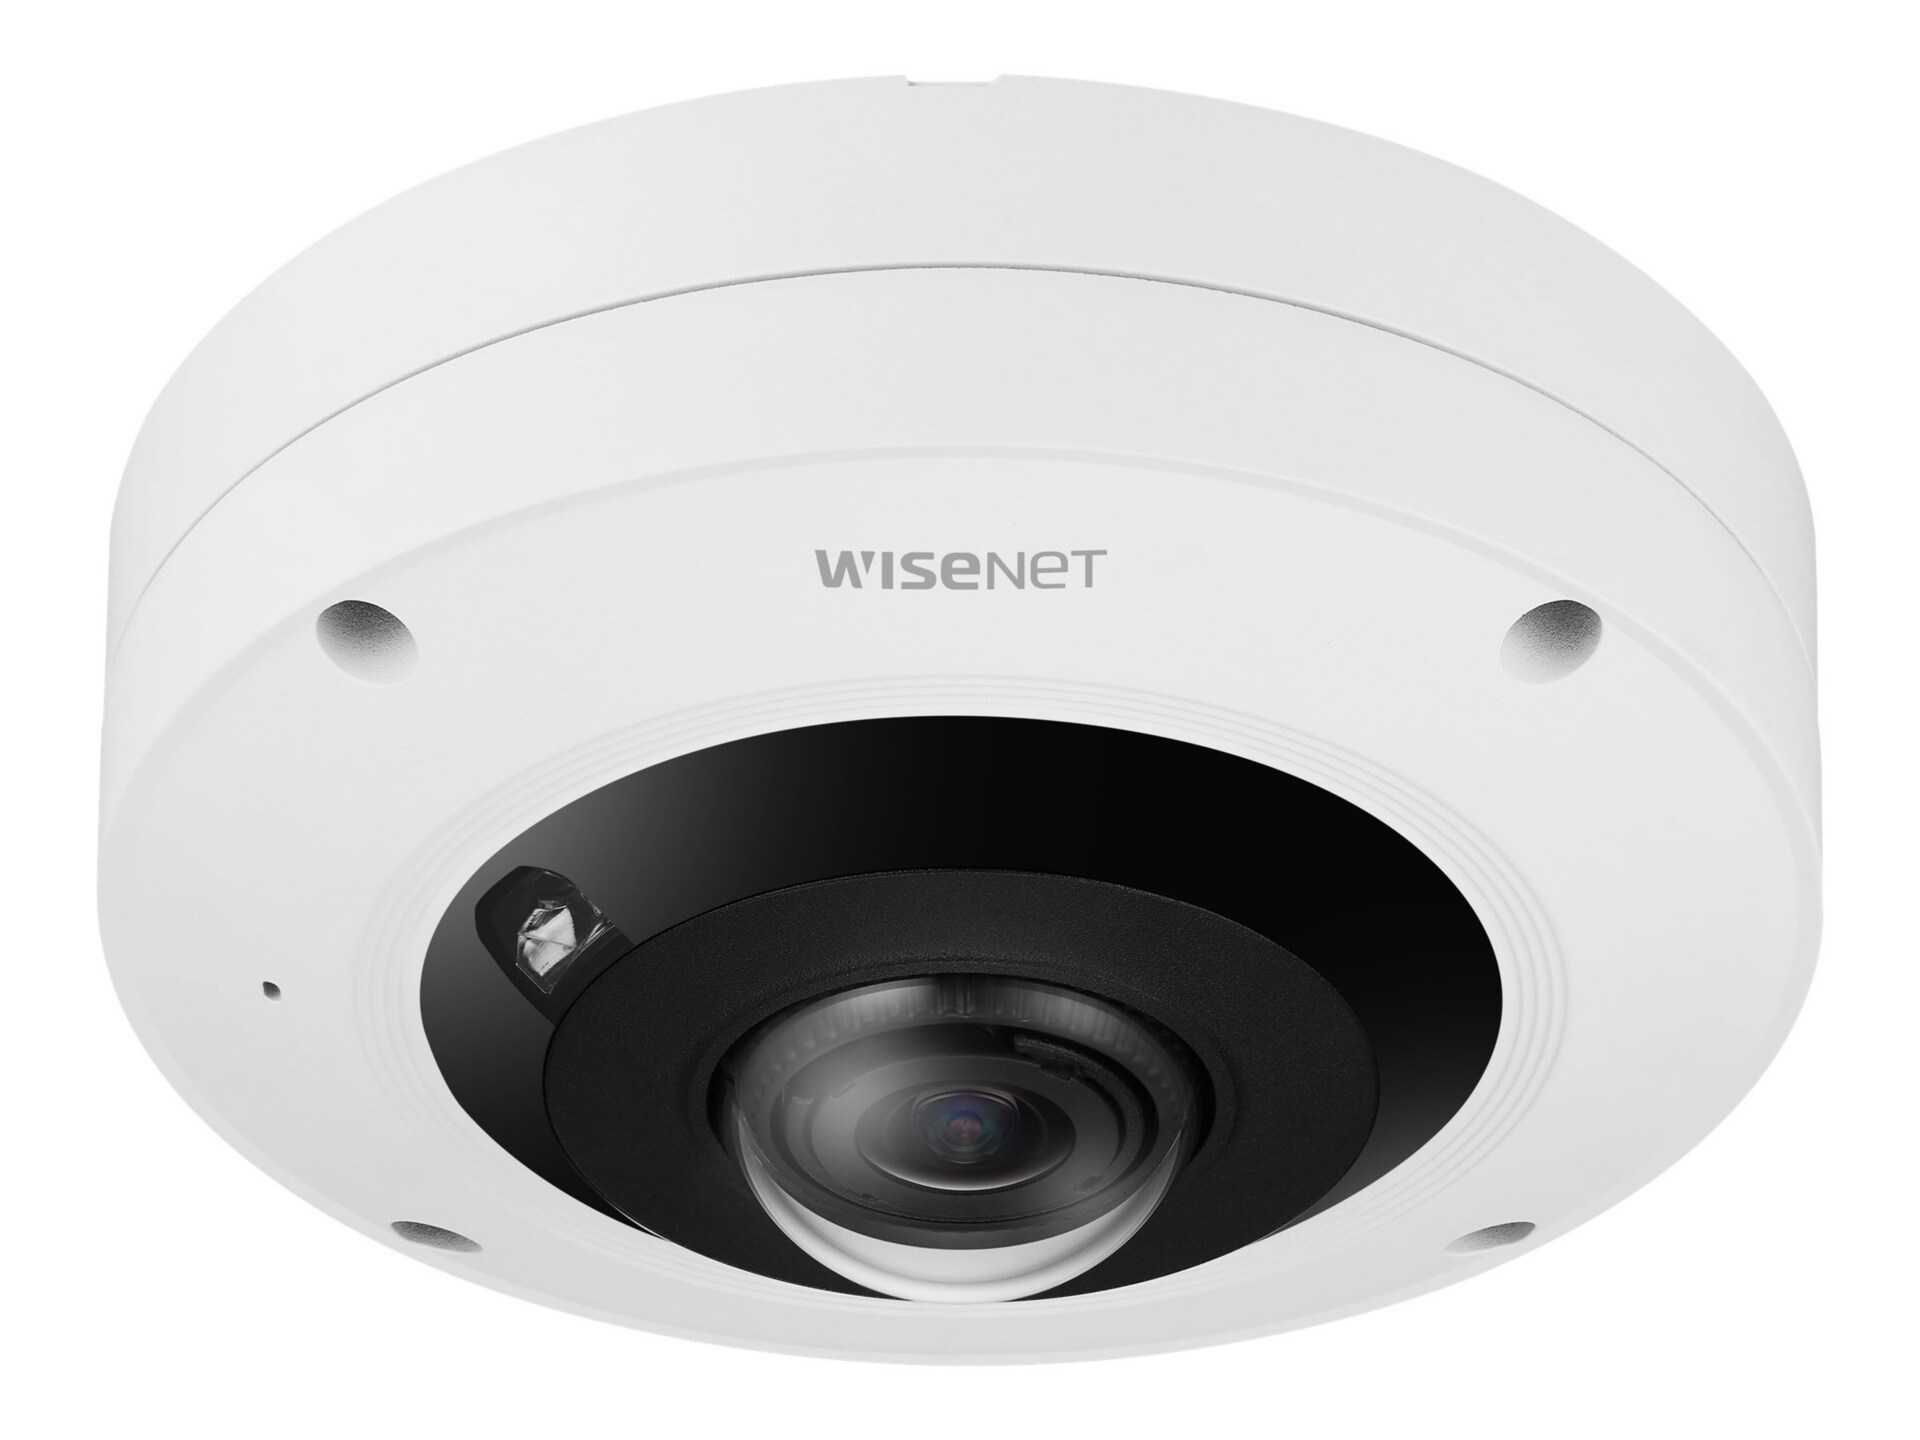 Hanwha Techwin WiseNet X XNF-9013RV - network surveillance camera - fisheye